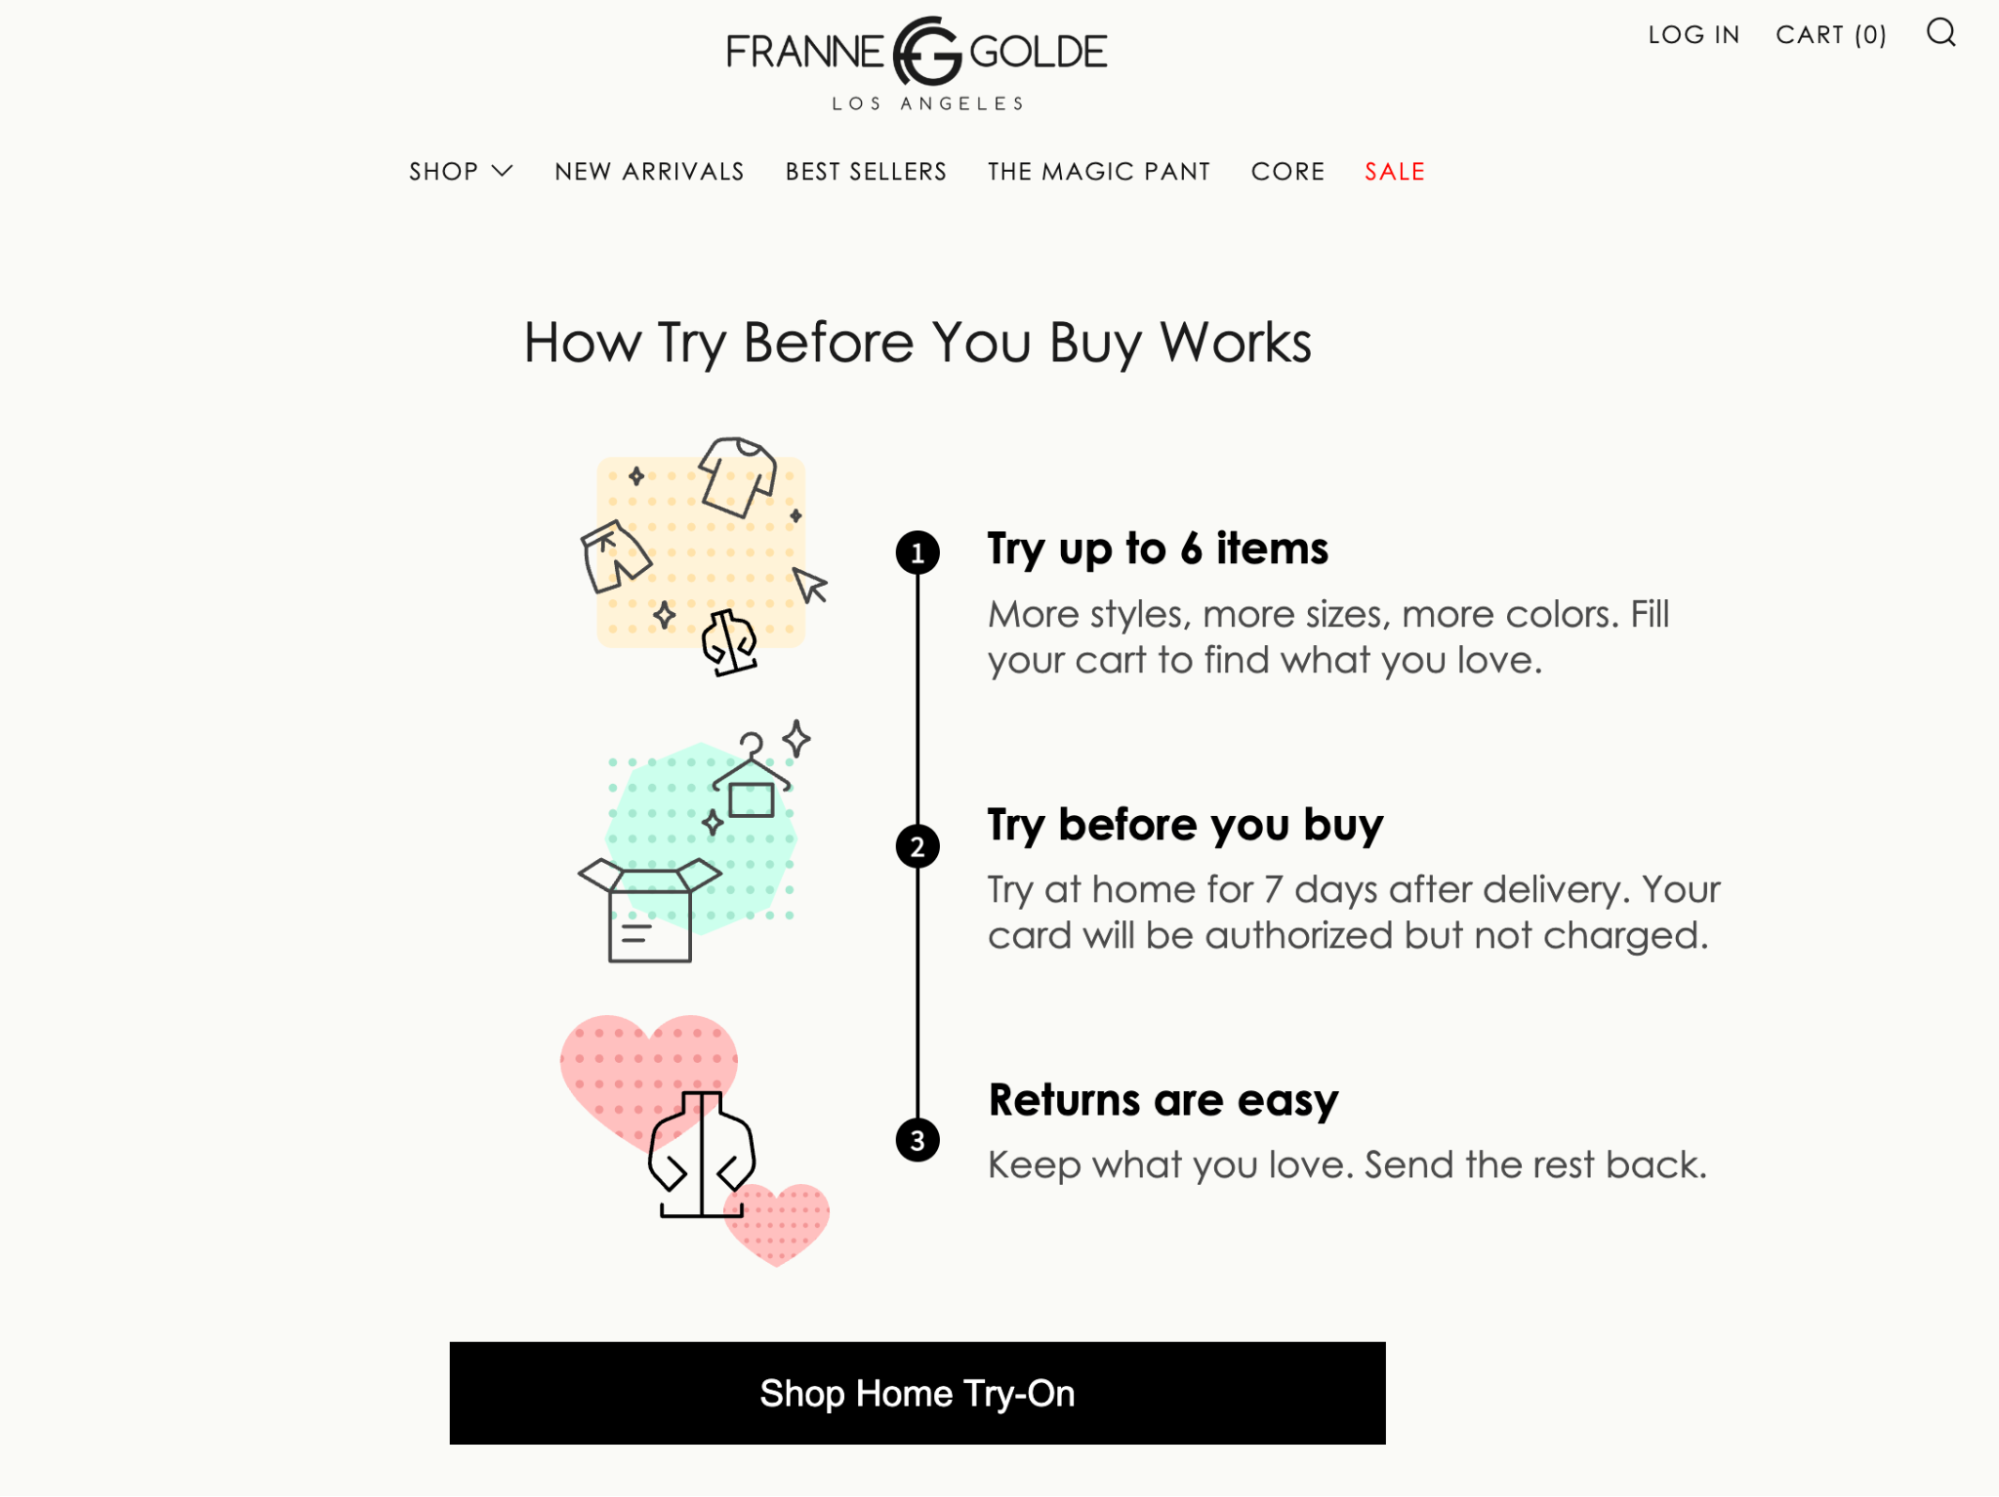 Image of Franne Golde’s try before you buy program